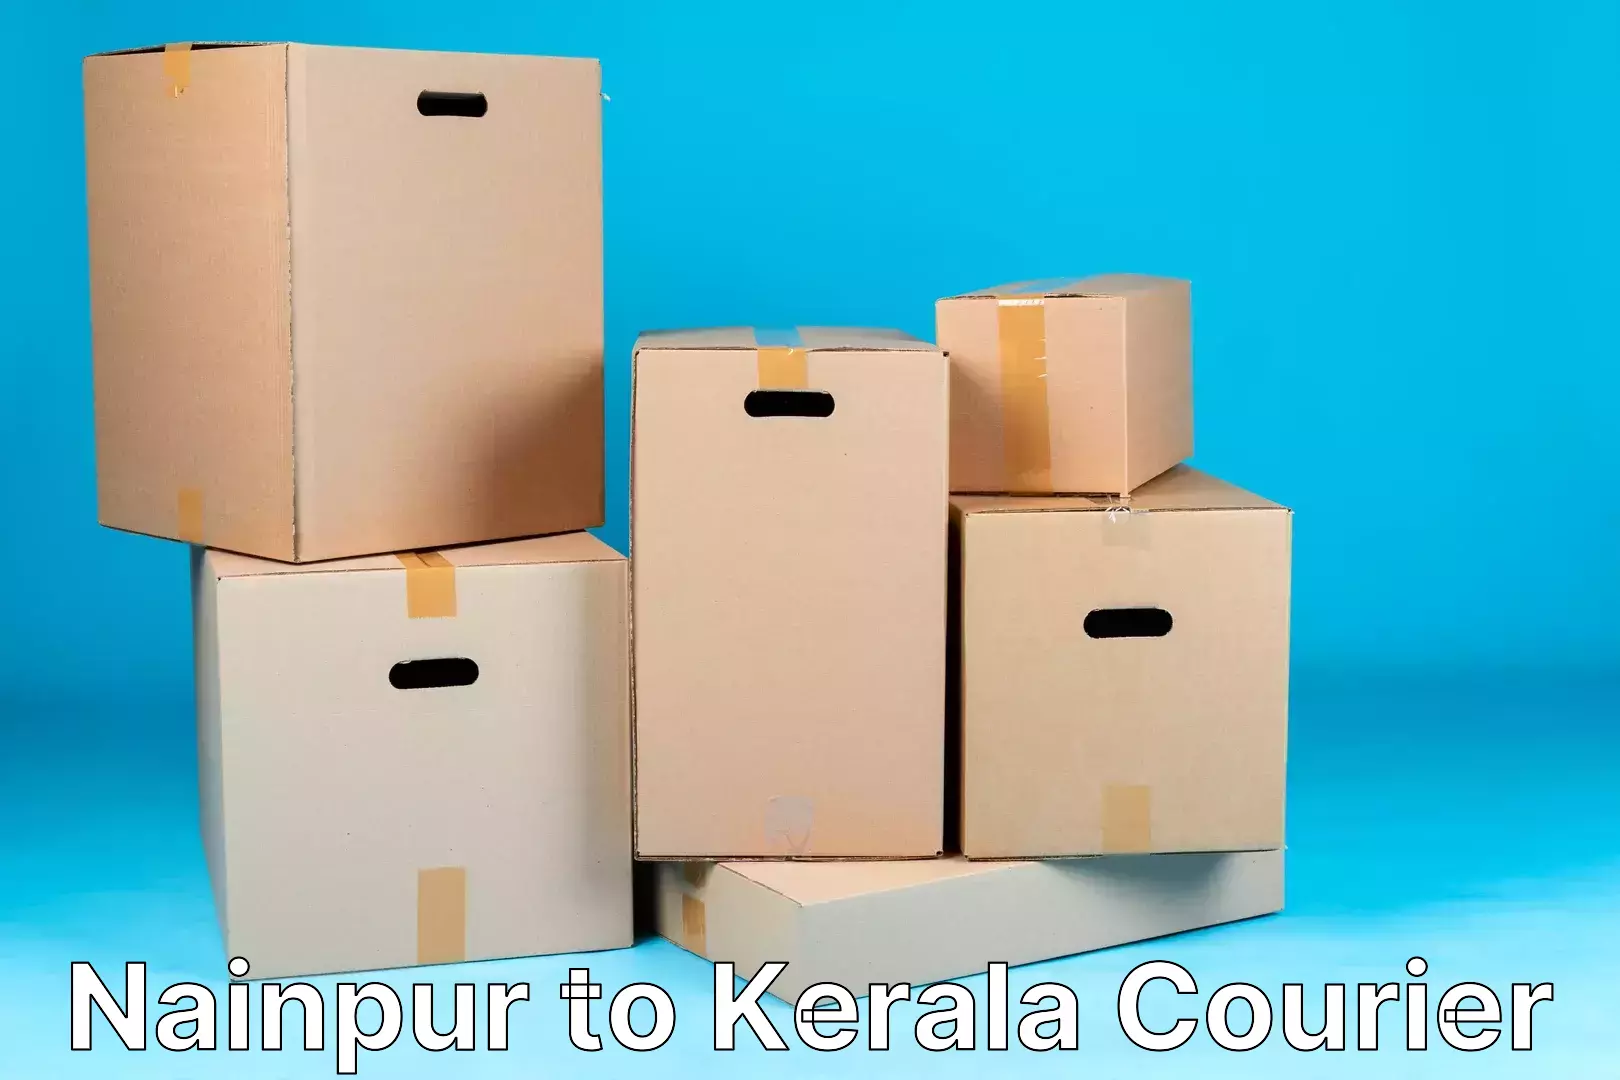 Efficient package consolidation Nainpur to Kerala